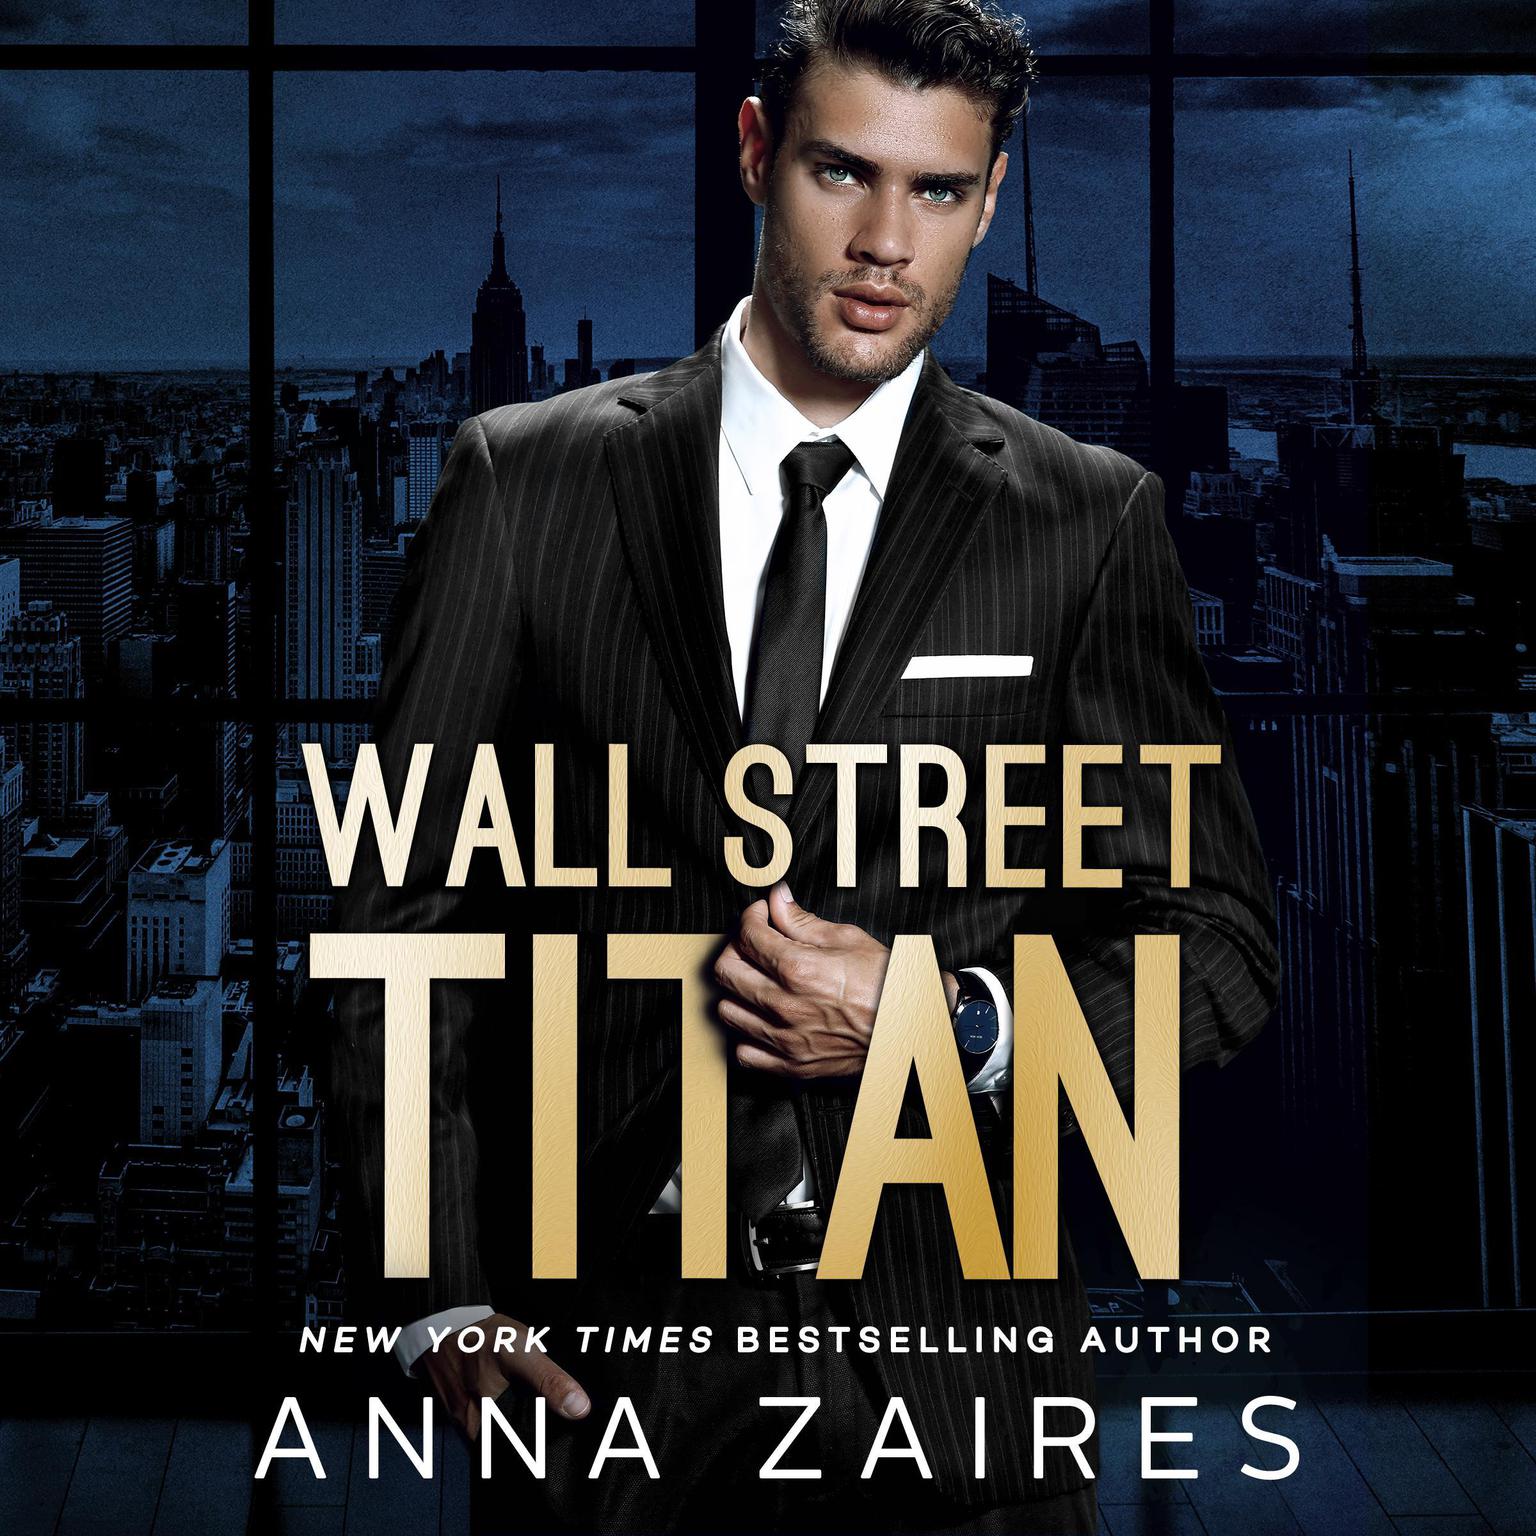 Wall Street Titan Audiobook, by Anna Zaires